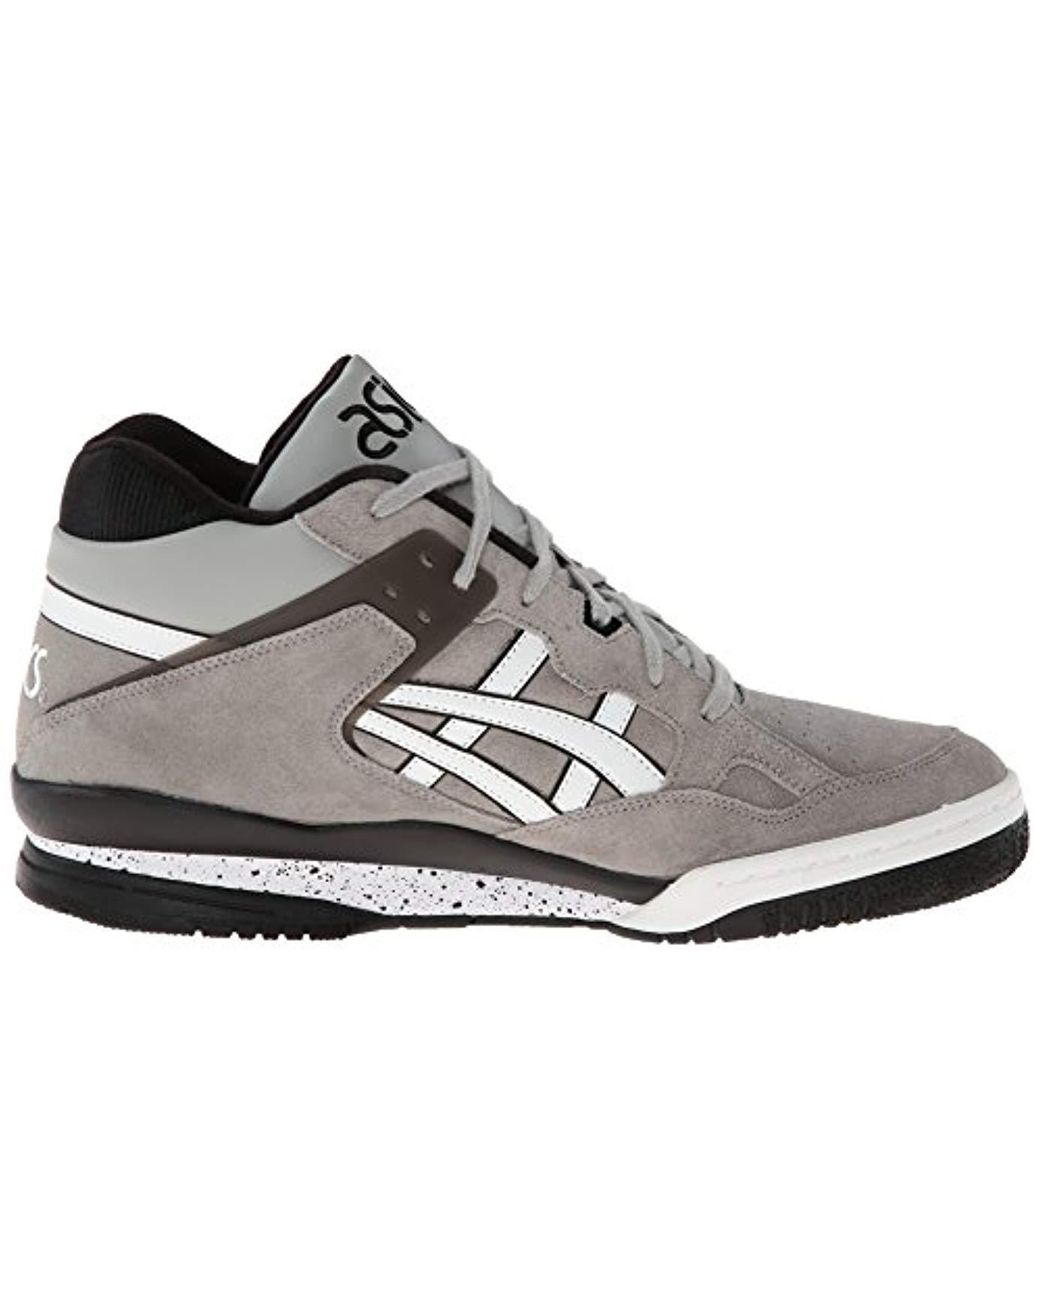 Asics Gel-spotlyte Ankle-high Leather Basketball Shoe in Gray for Men | Lyst